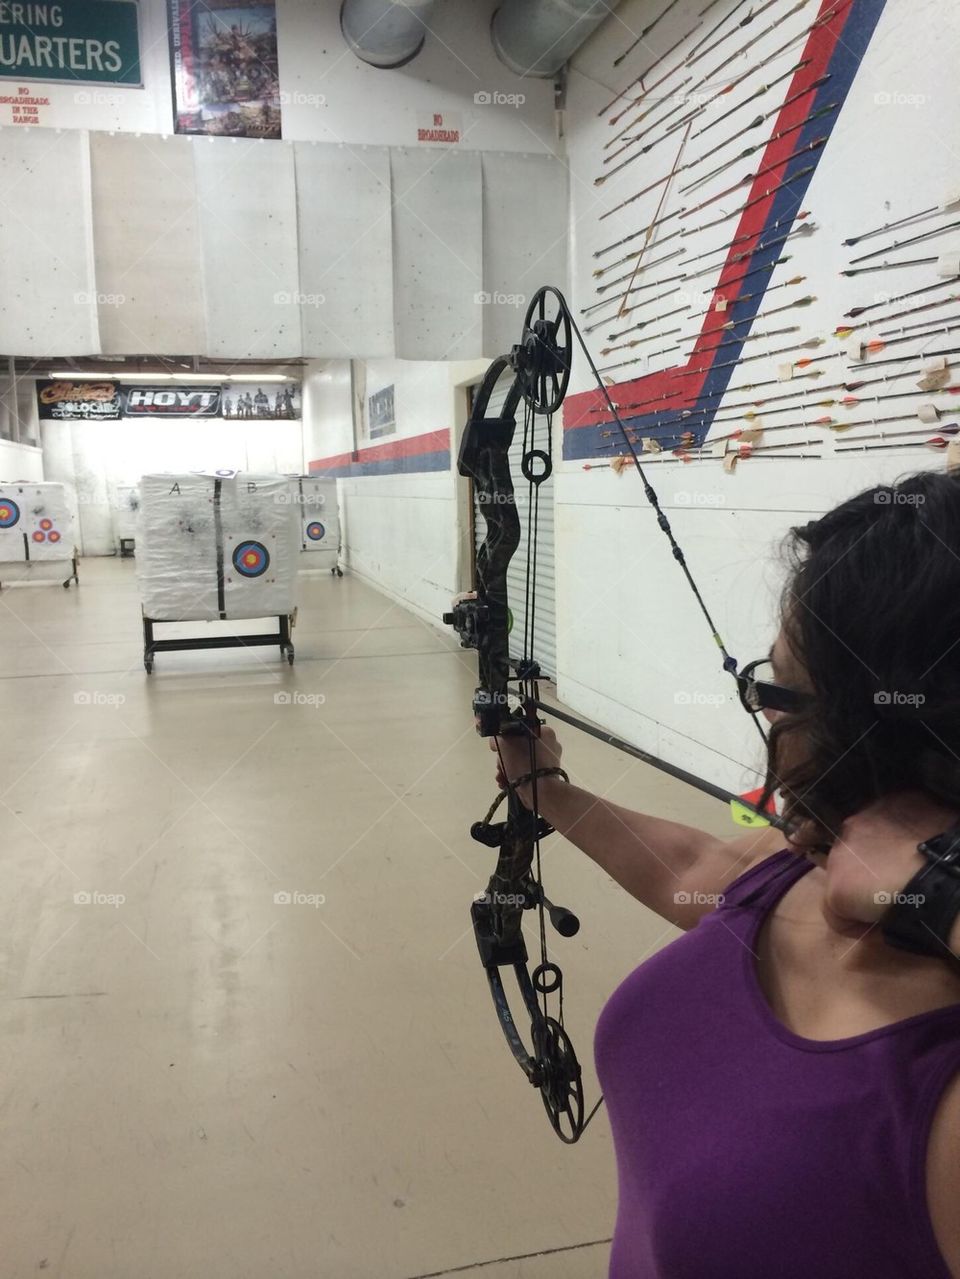 Archery Girl